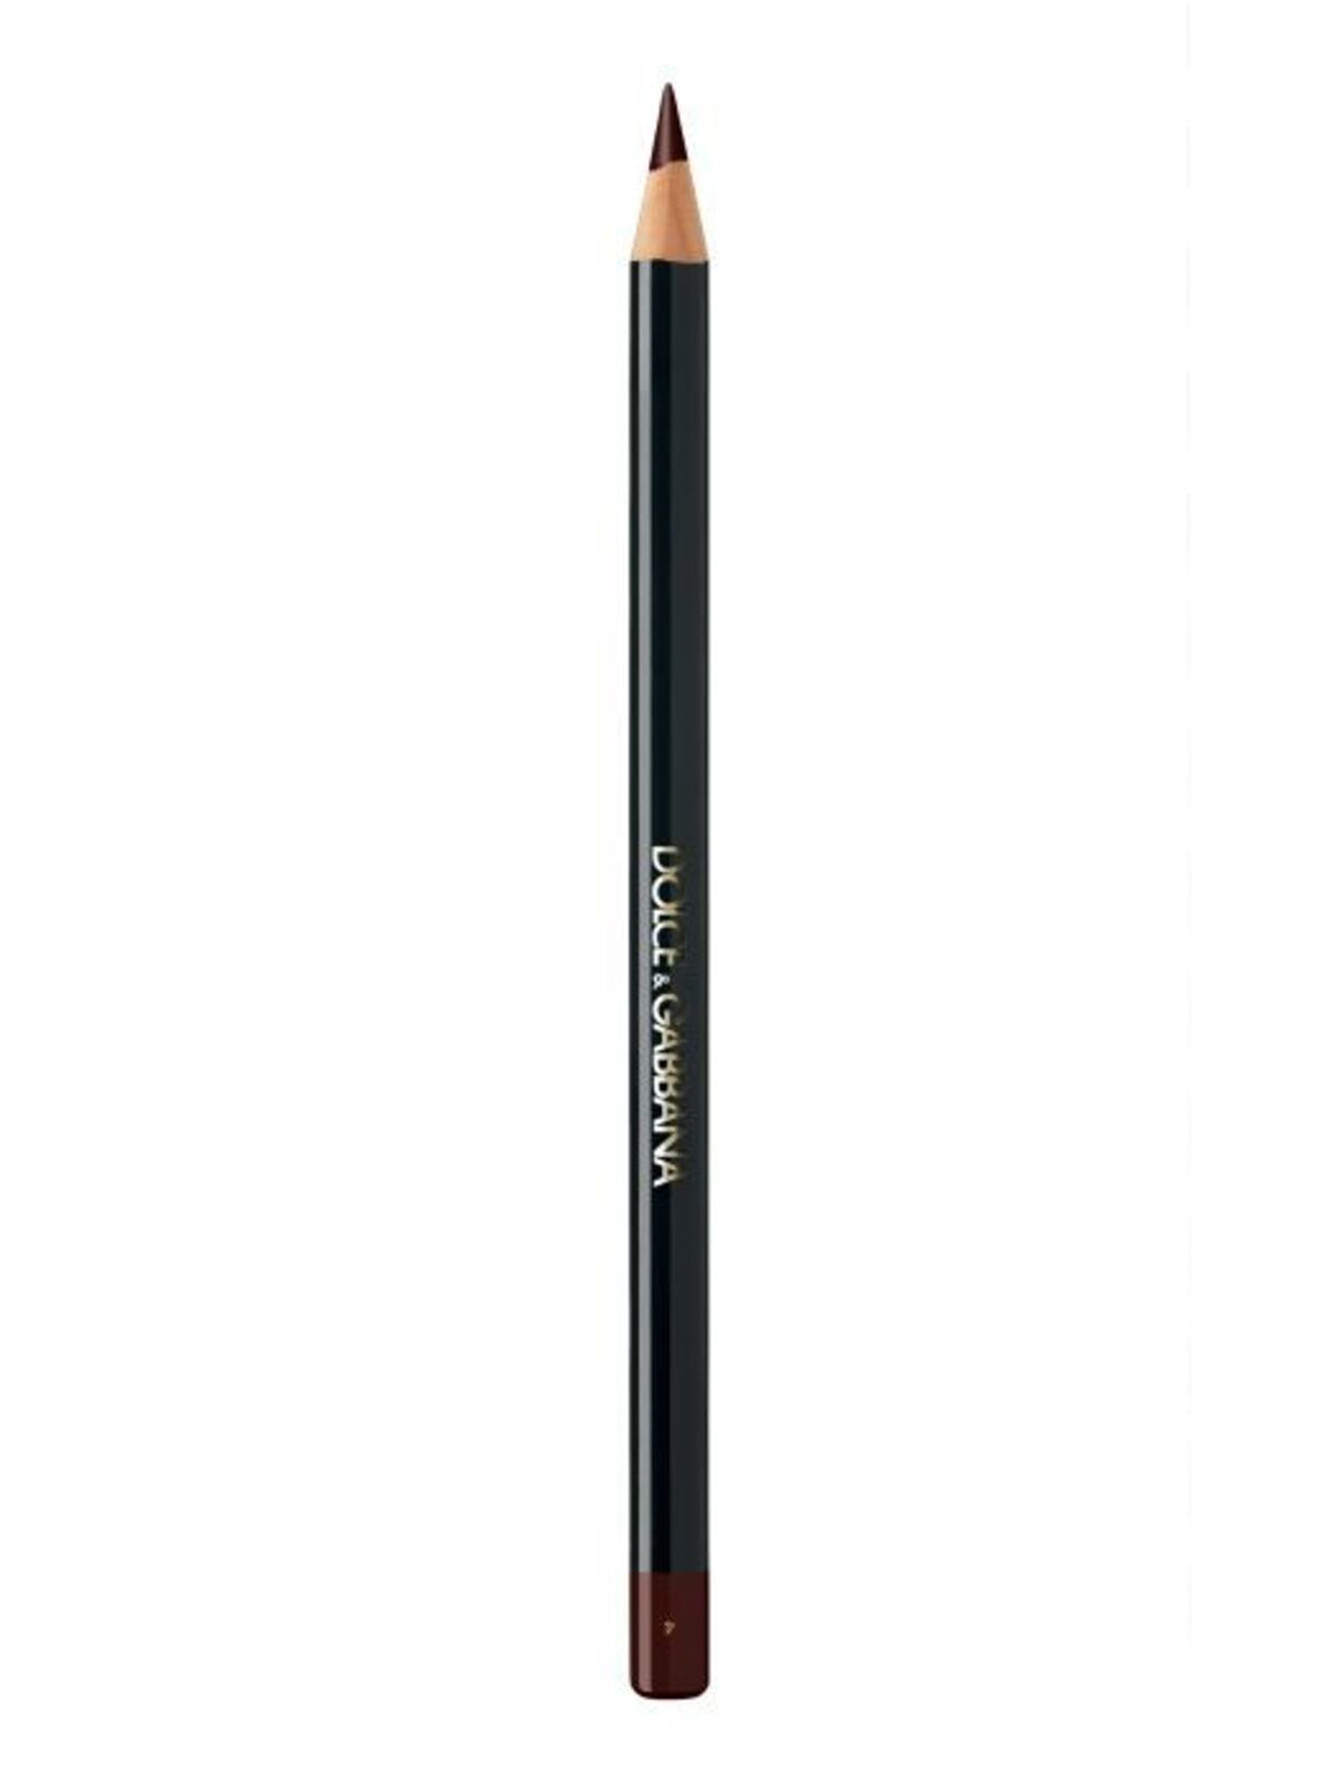 Карандаш-кайал для глаз The Khol Pencil, 4 Chocolate, 2 г - Общий вид